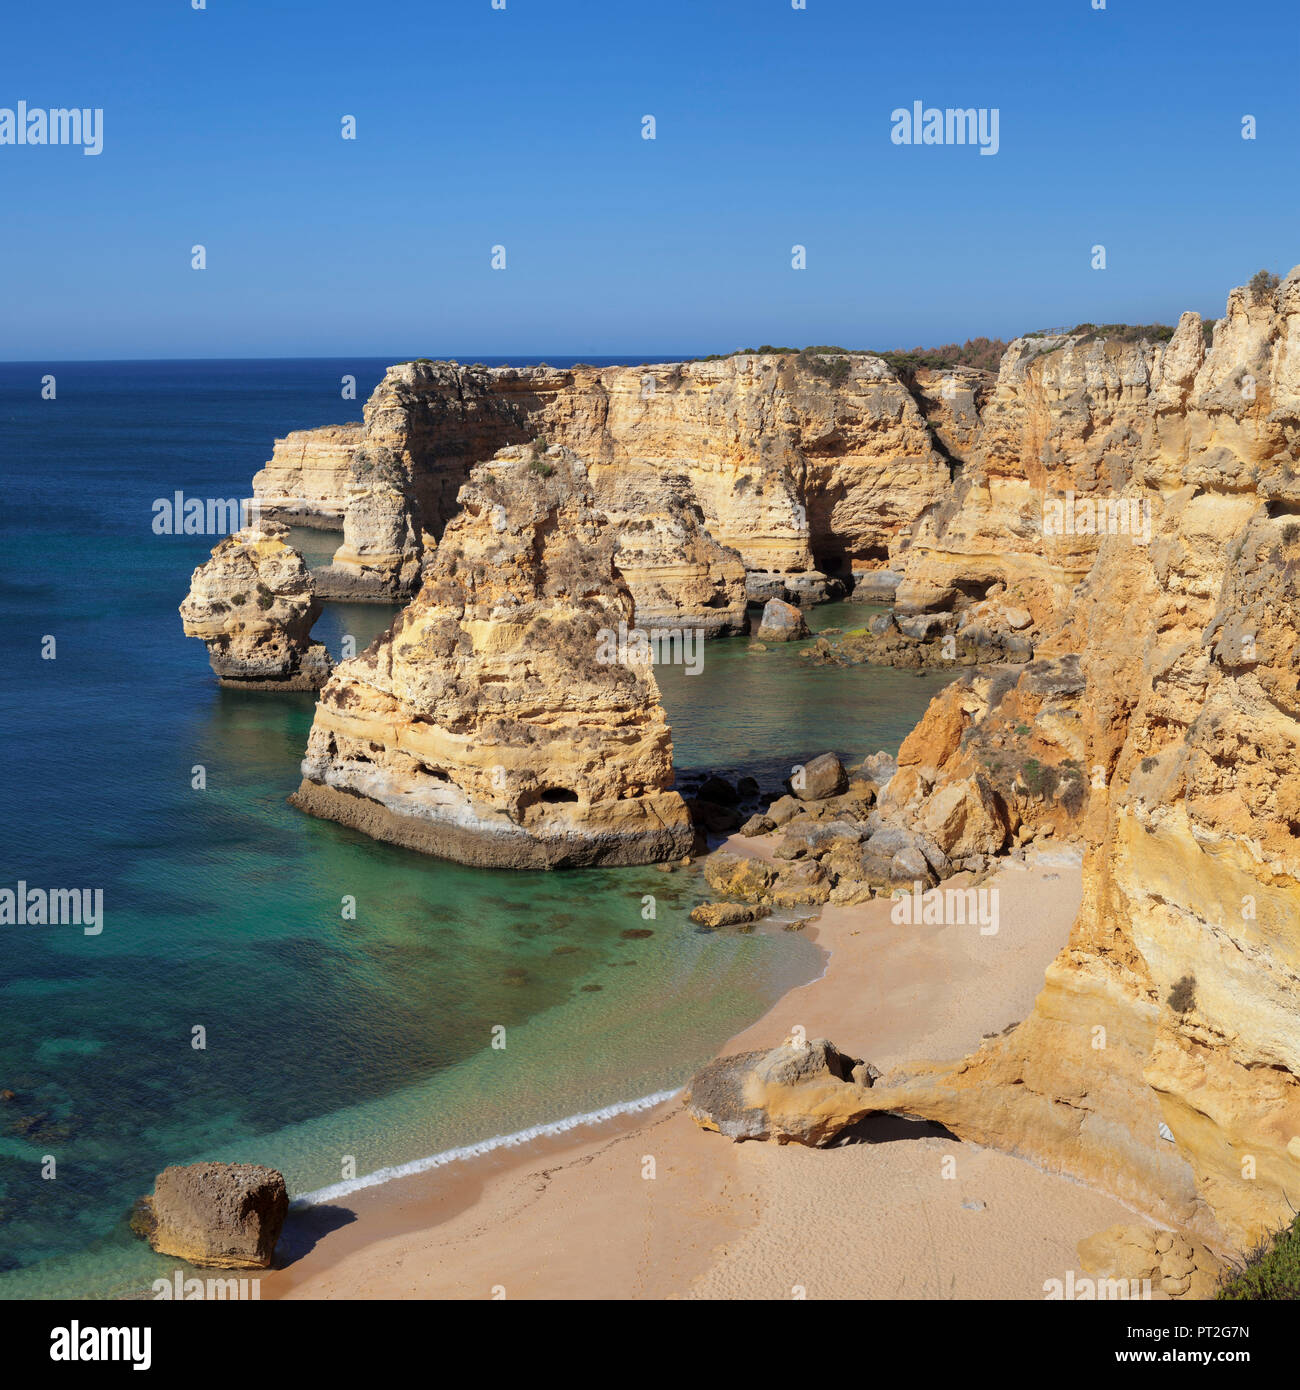 Praia da Marinha beach, rocky coast, at Lagoa, Algarve, Portugal Stock Photo